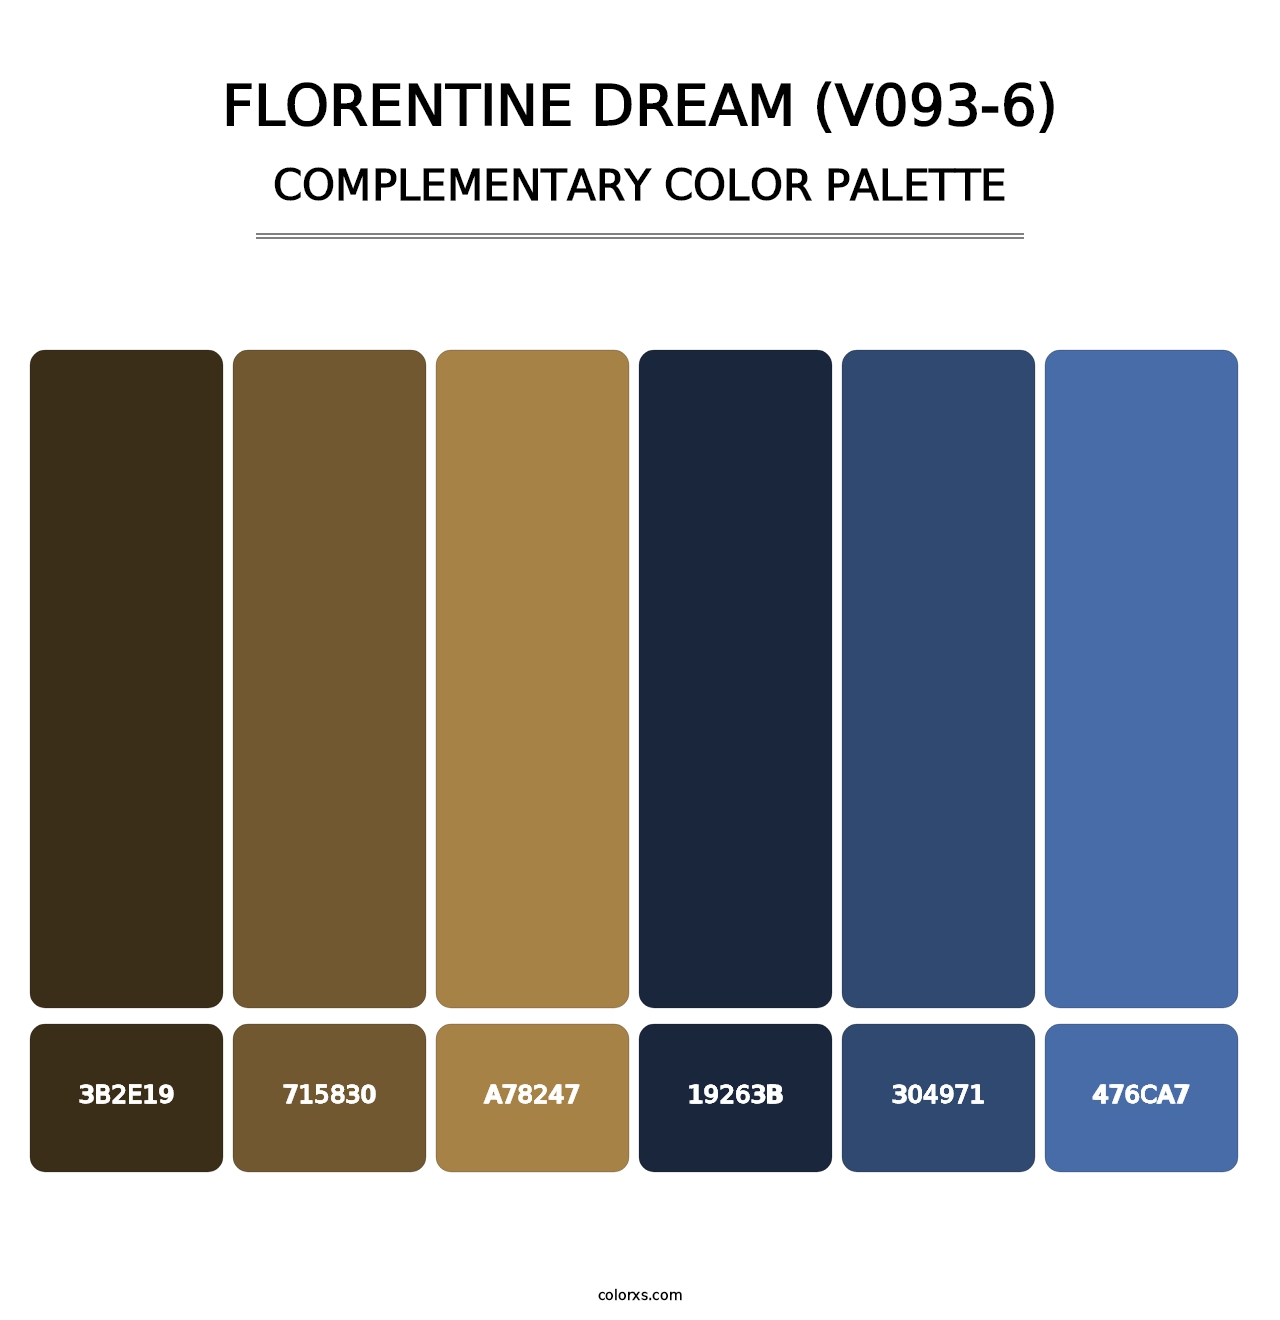 Florentine Dream (V093-6) - Complementary Color Palette